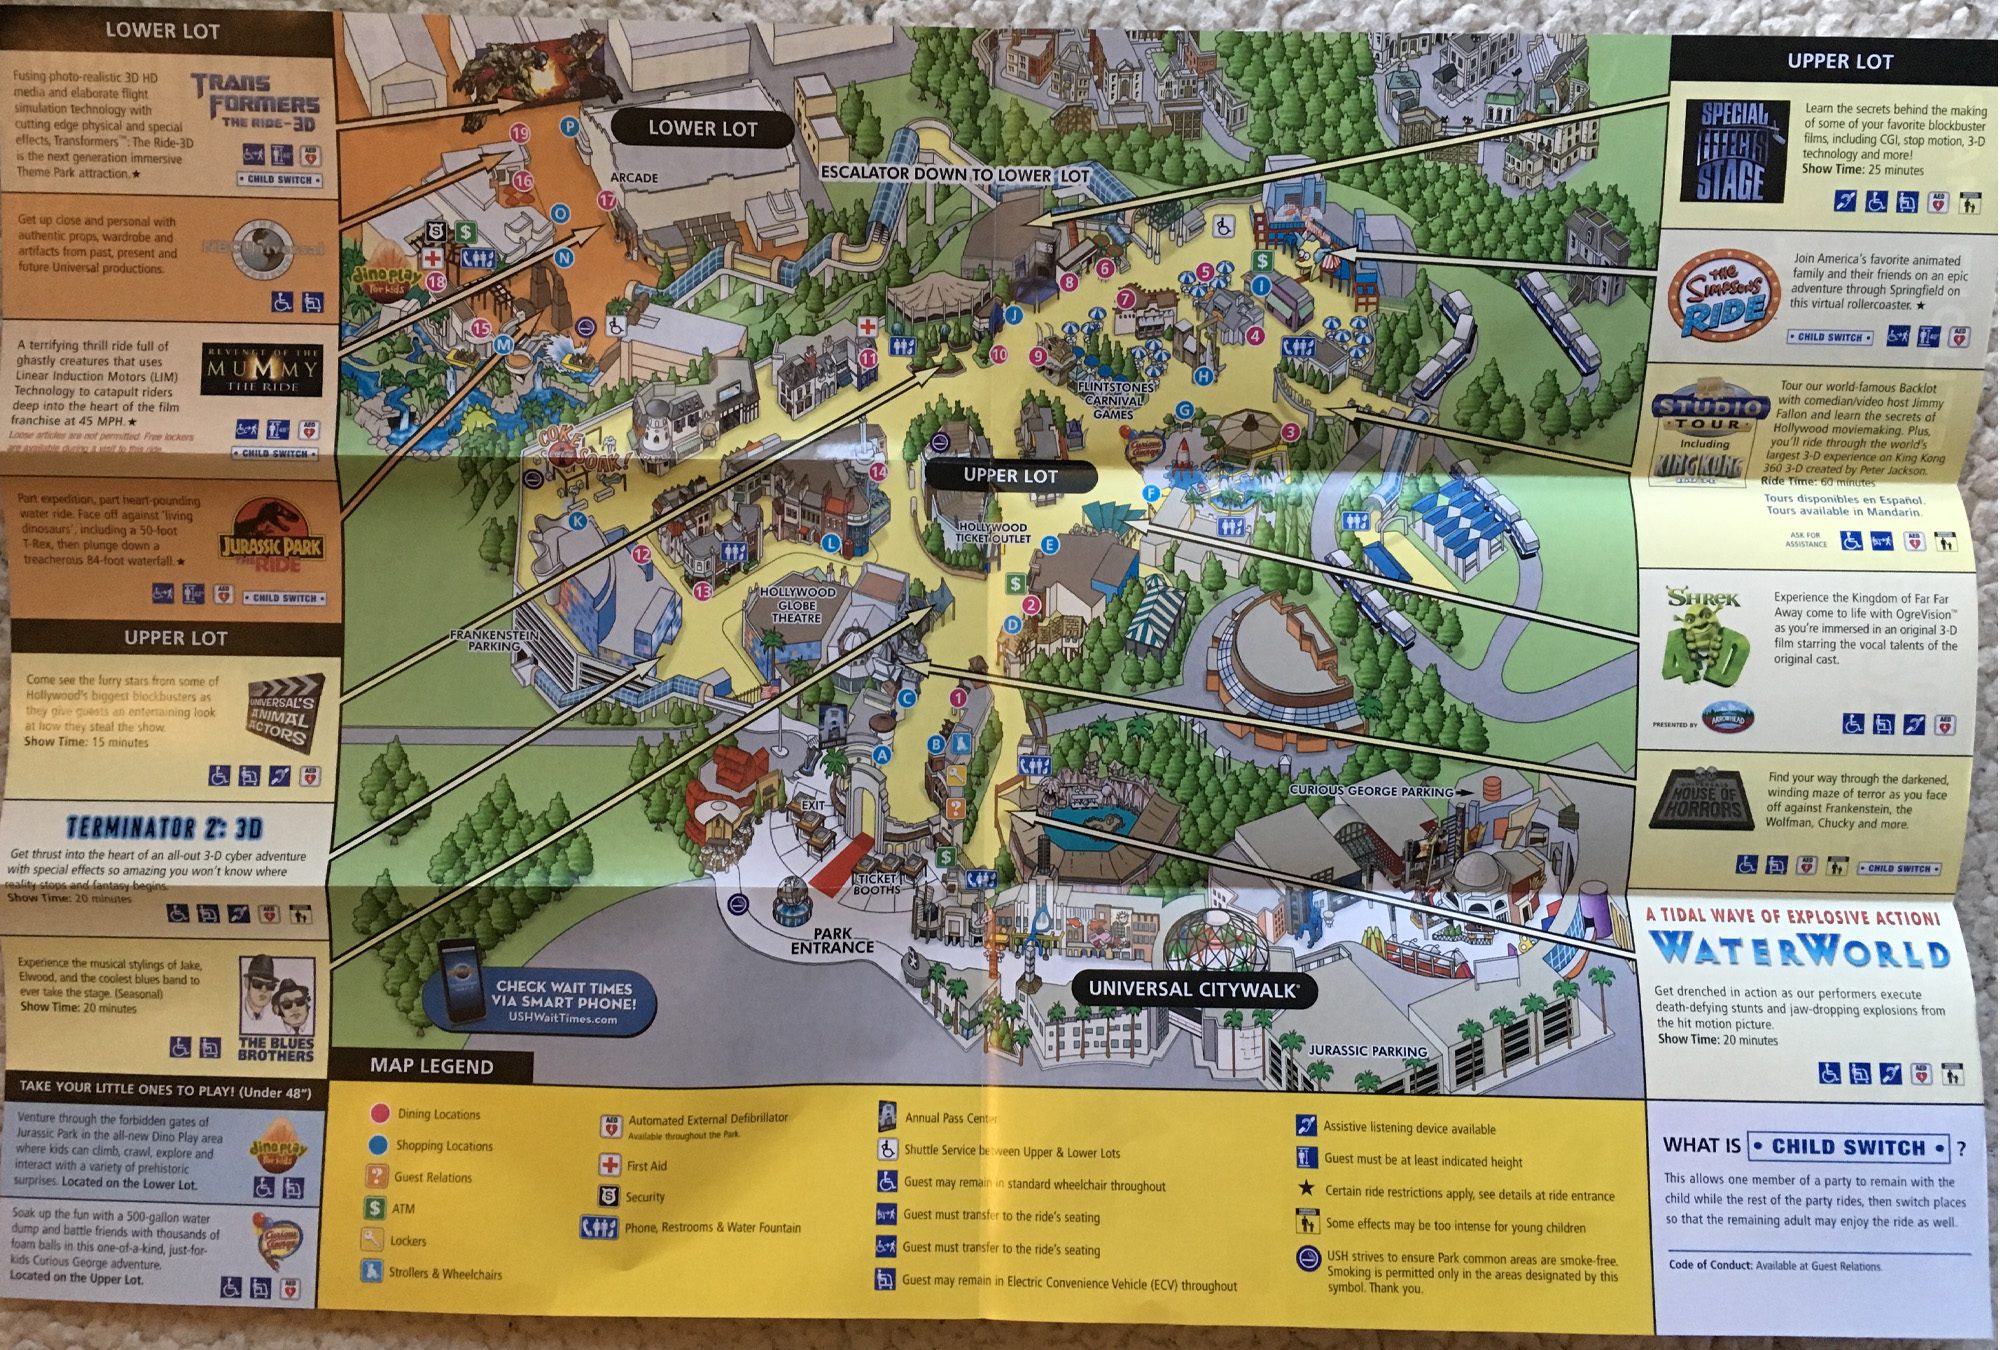 2012 Universal Studios Hollywood Theme Park Map